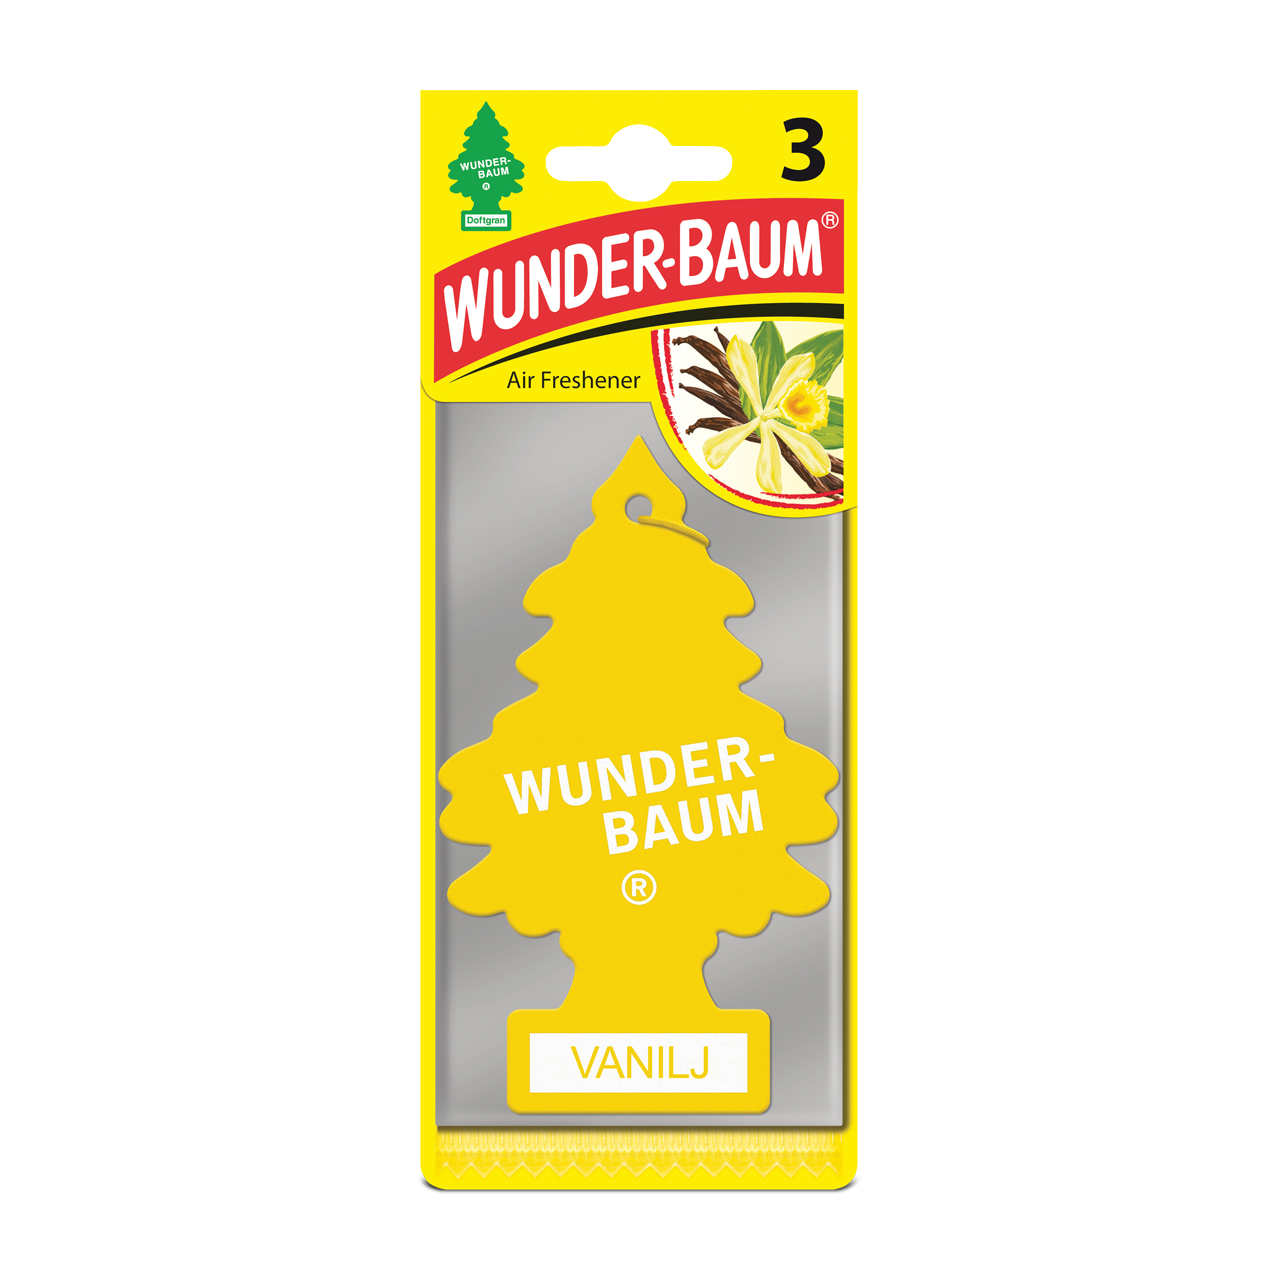 Wunder-Baum Air Freshener Vanilla 3-Pack - Dirt cheap price!